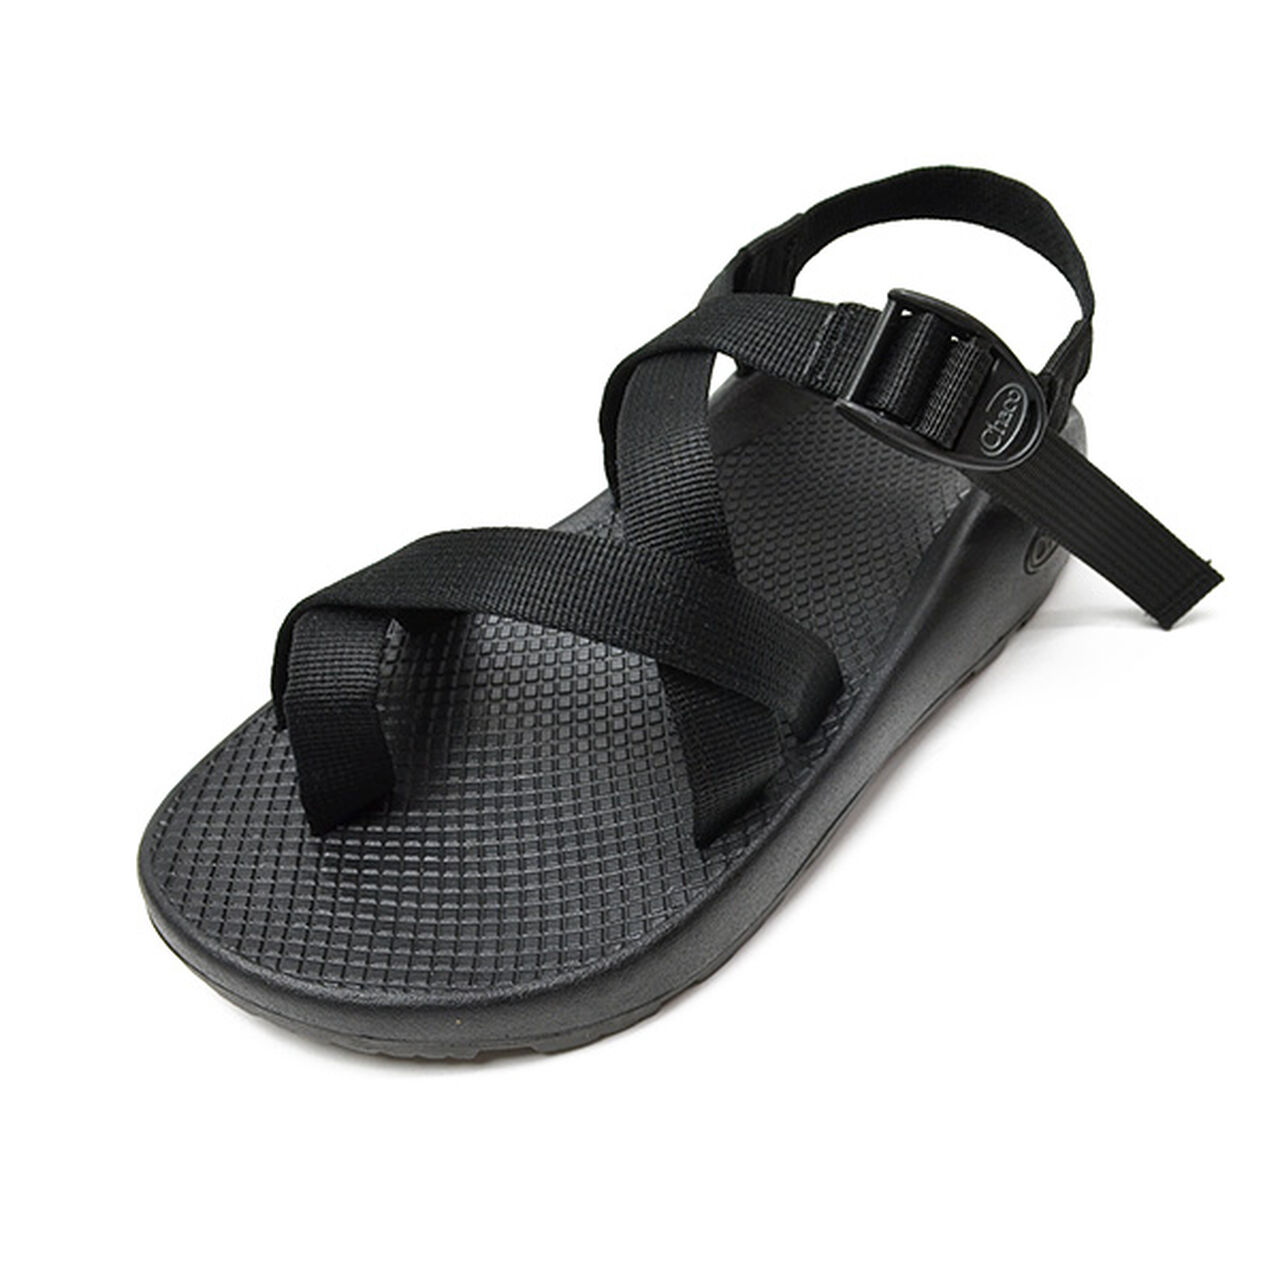 Z2 classic / Strap Sandals,Black, large image number 0